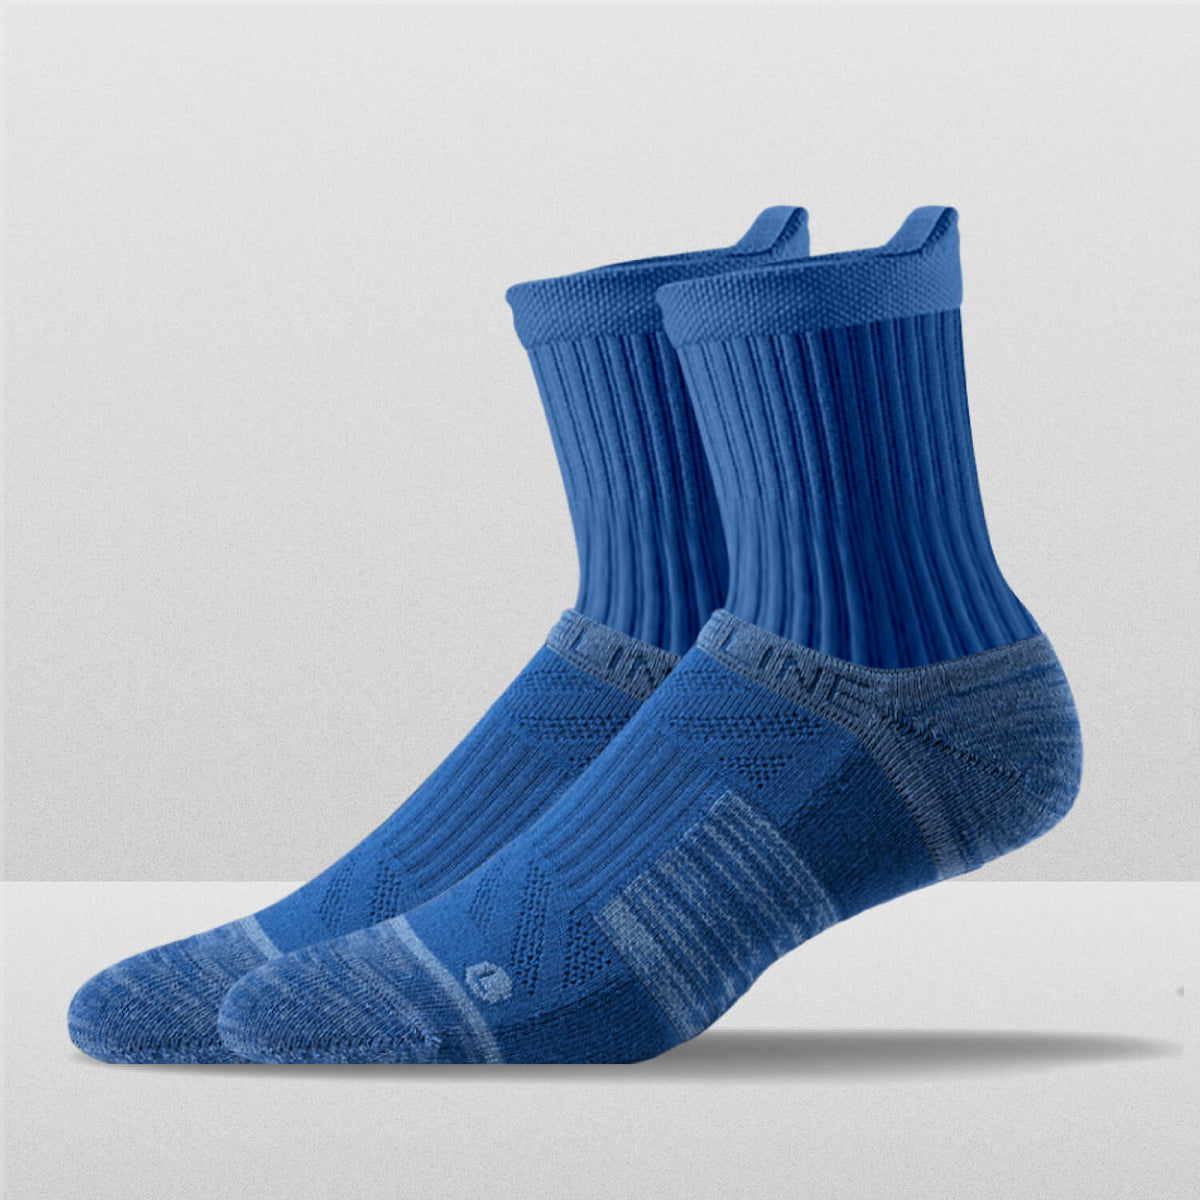 Strideline Socks Review - WearTesters